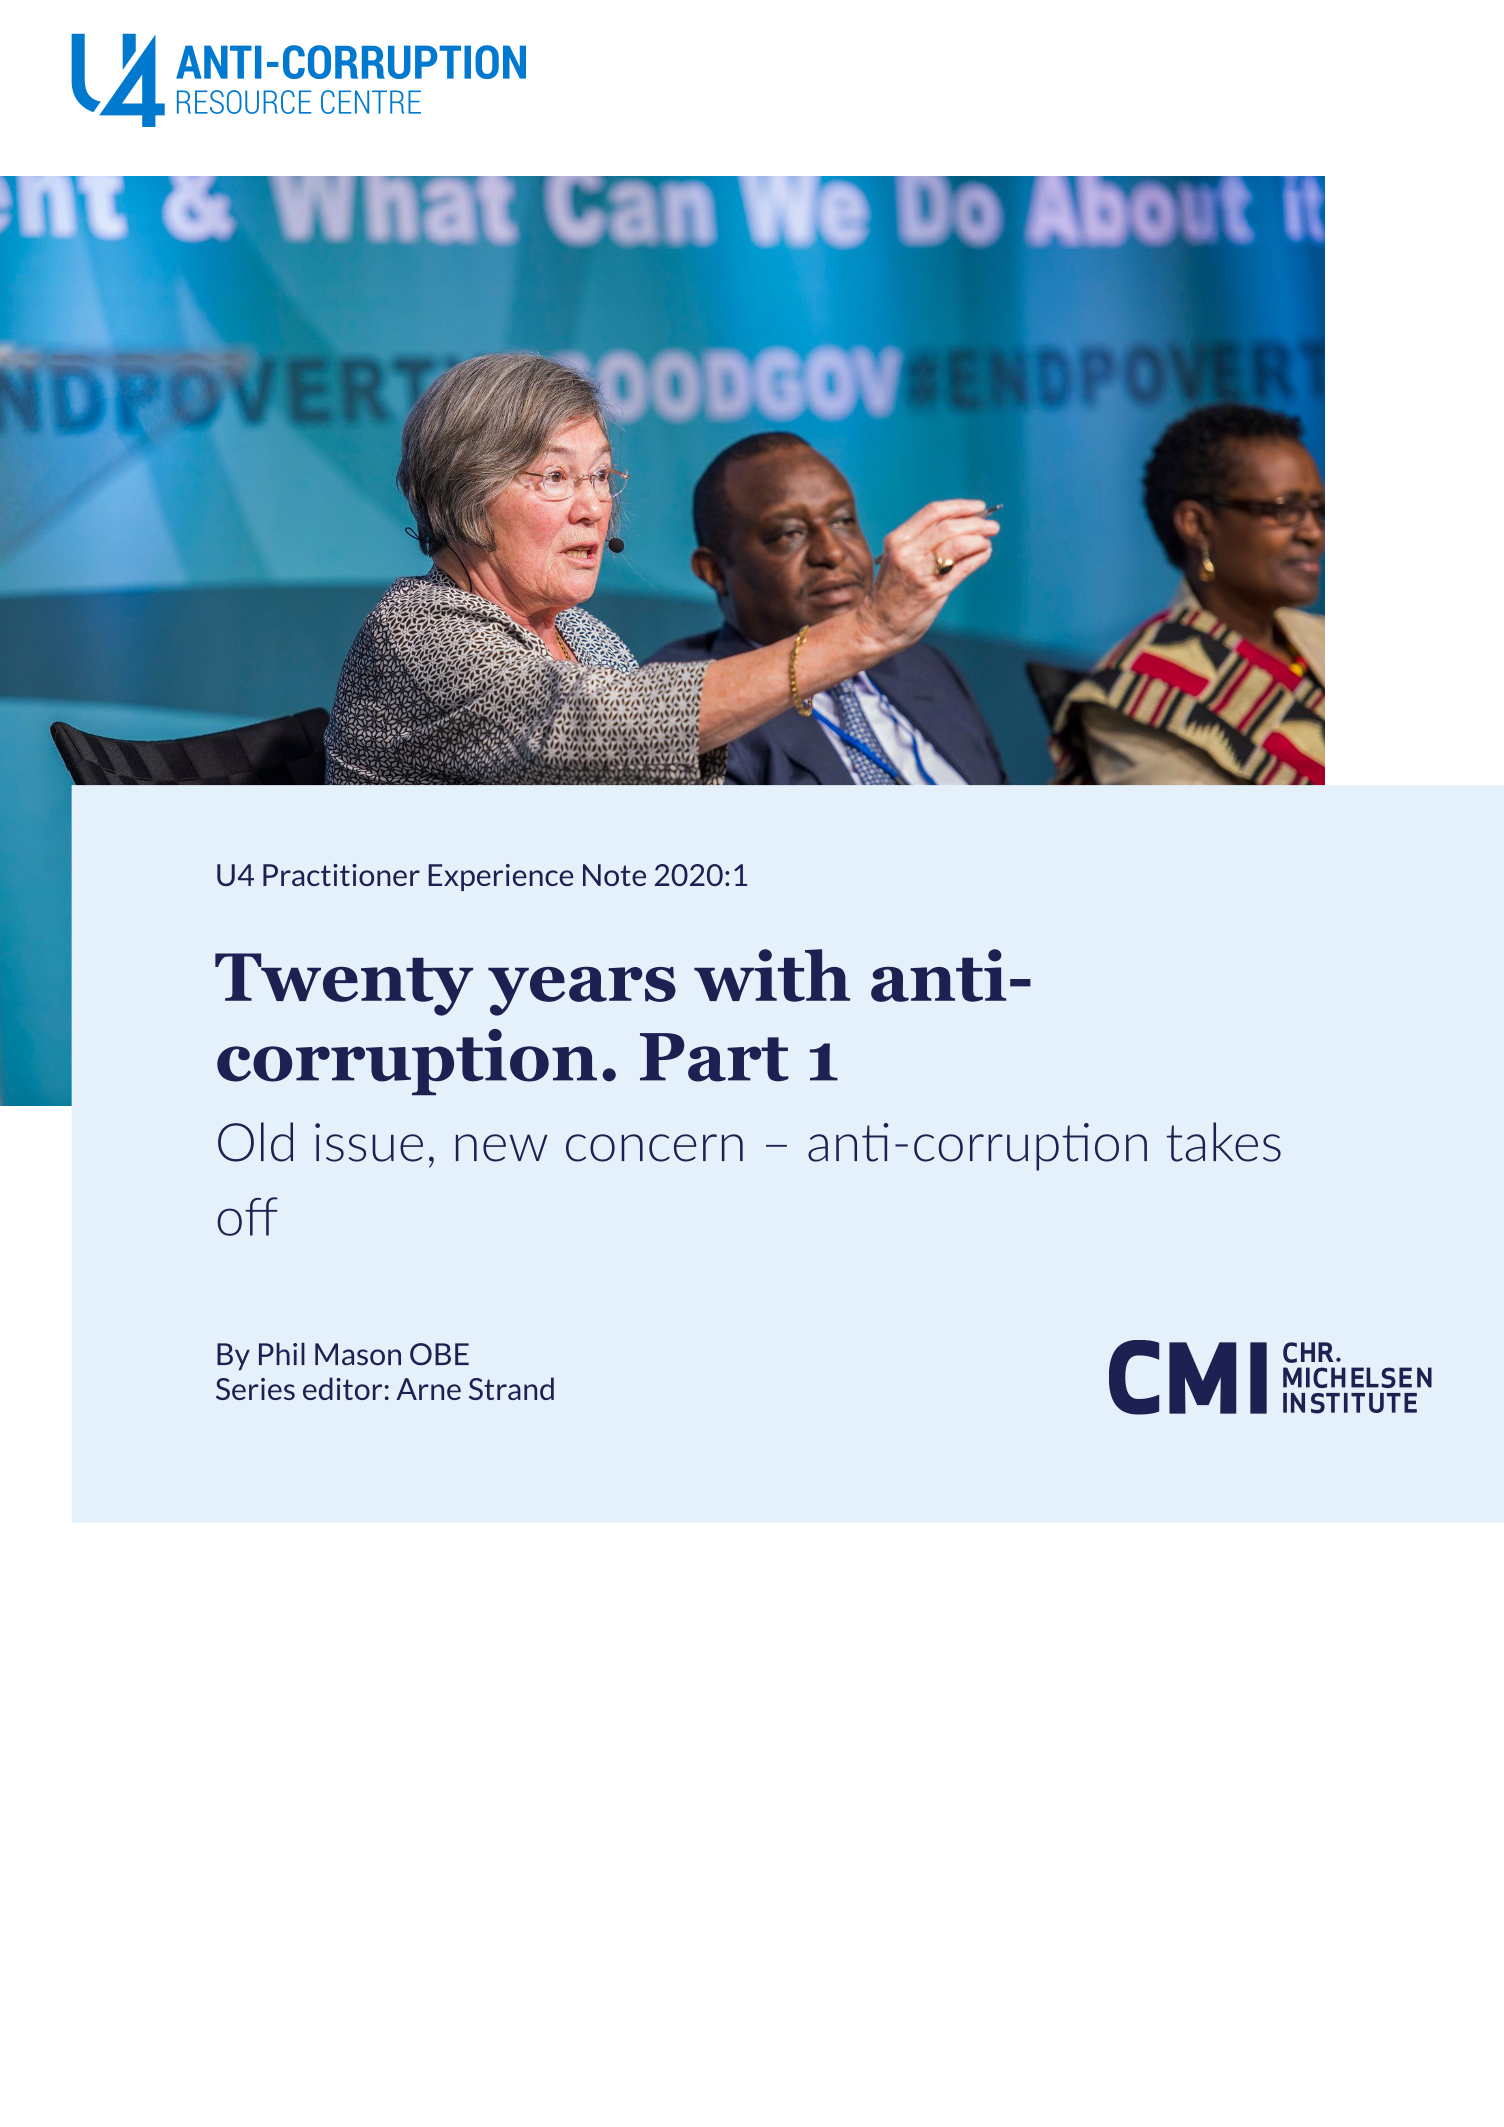 Twenty years with anti-corruption. Part 1